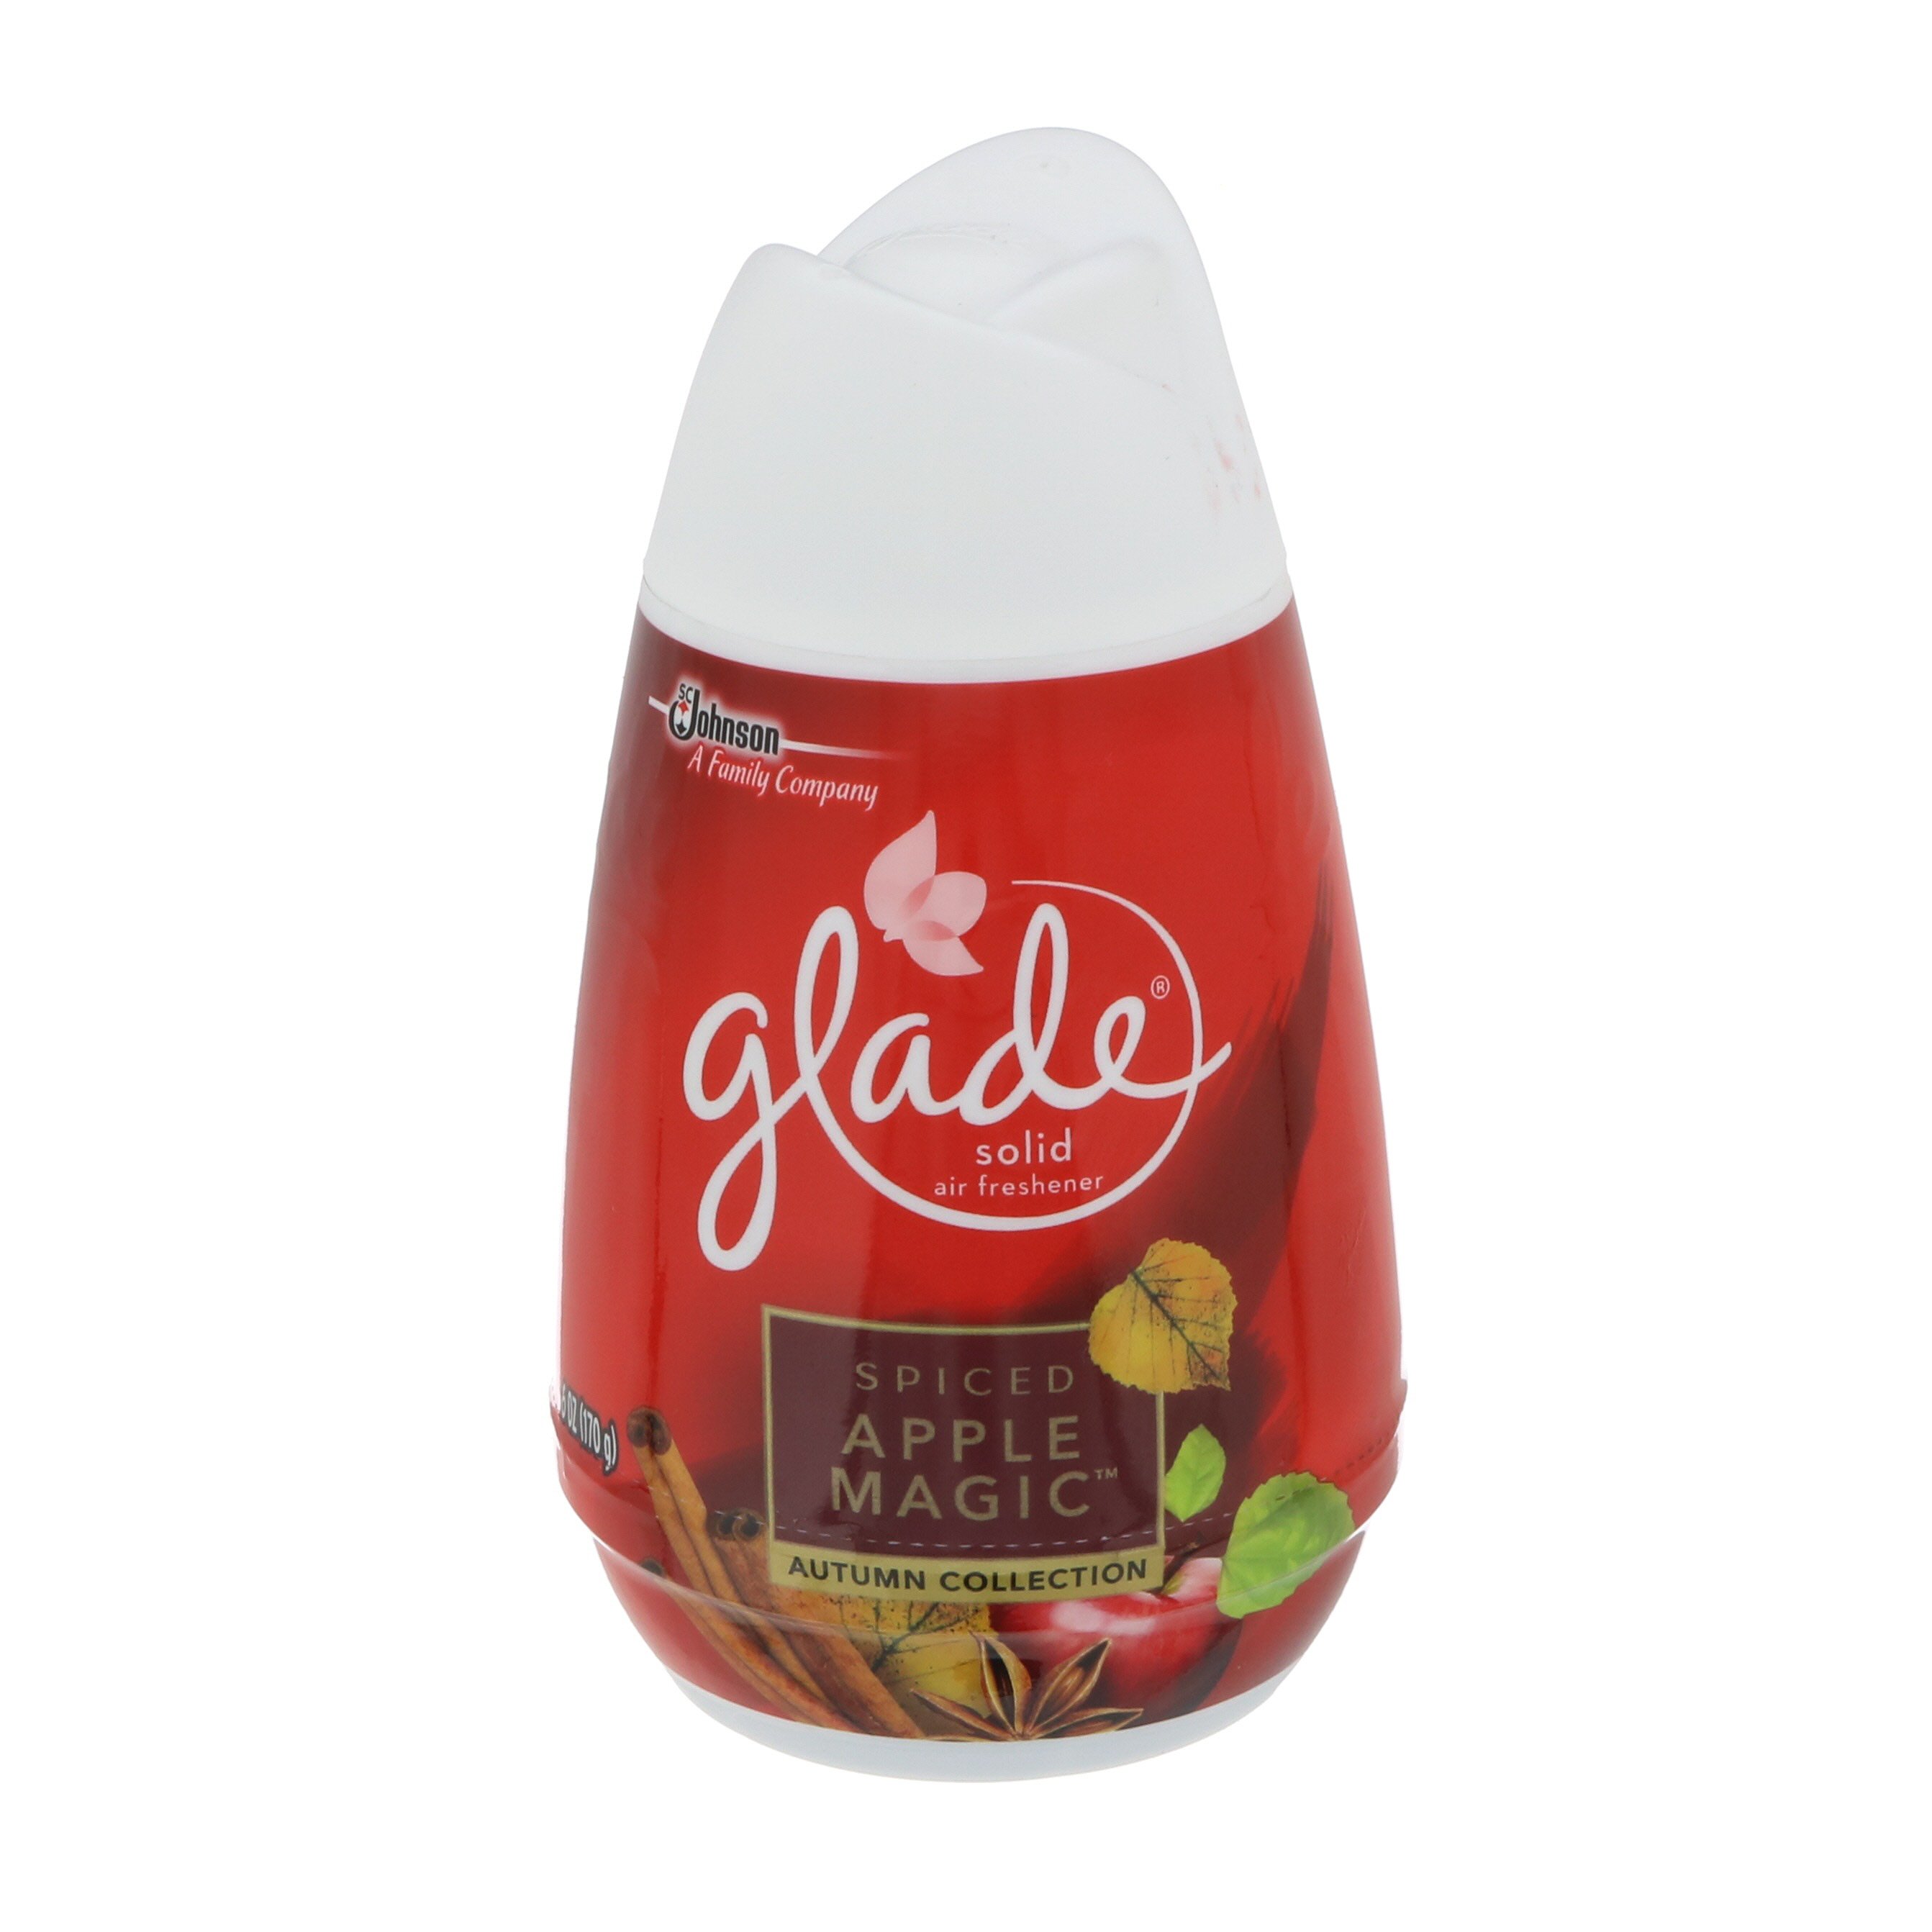 Glade Spiced Apple Magic Solid Air Freshener - Shop Air Fresheners at H-E-B